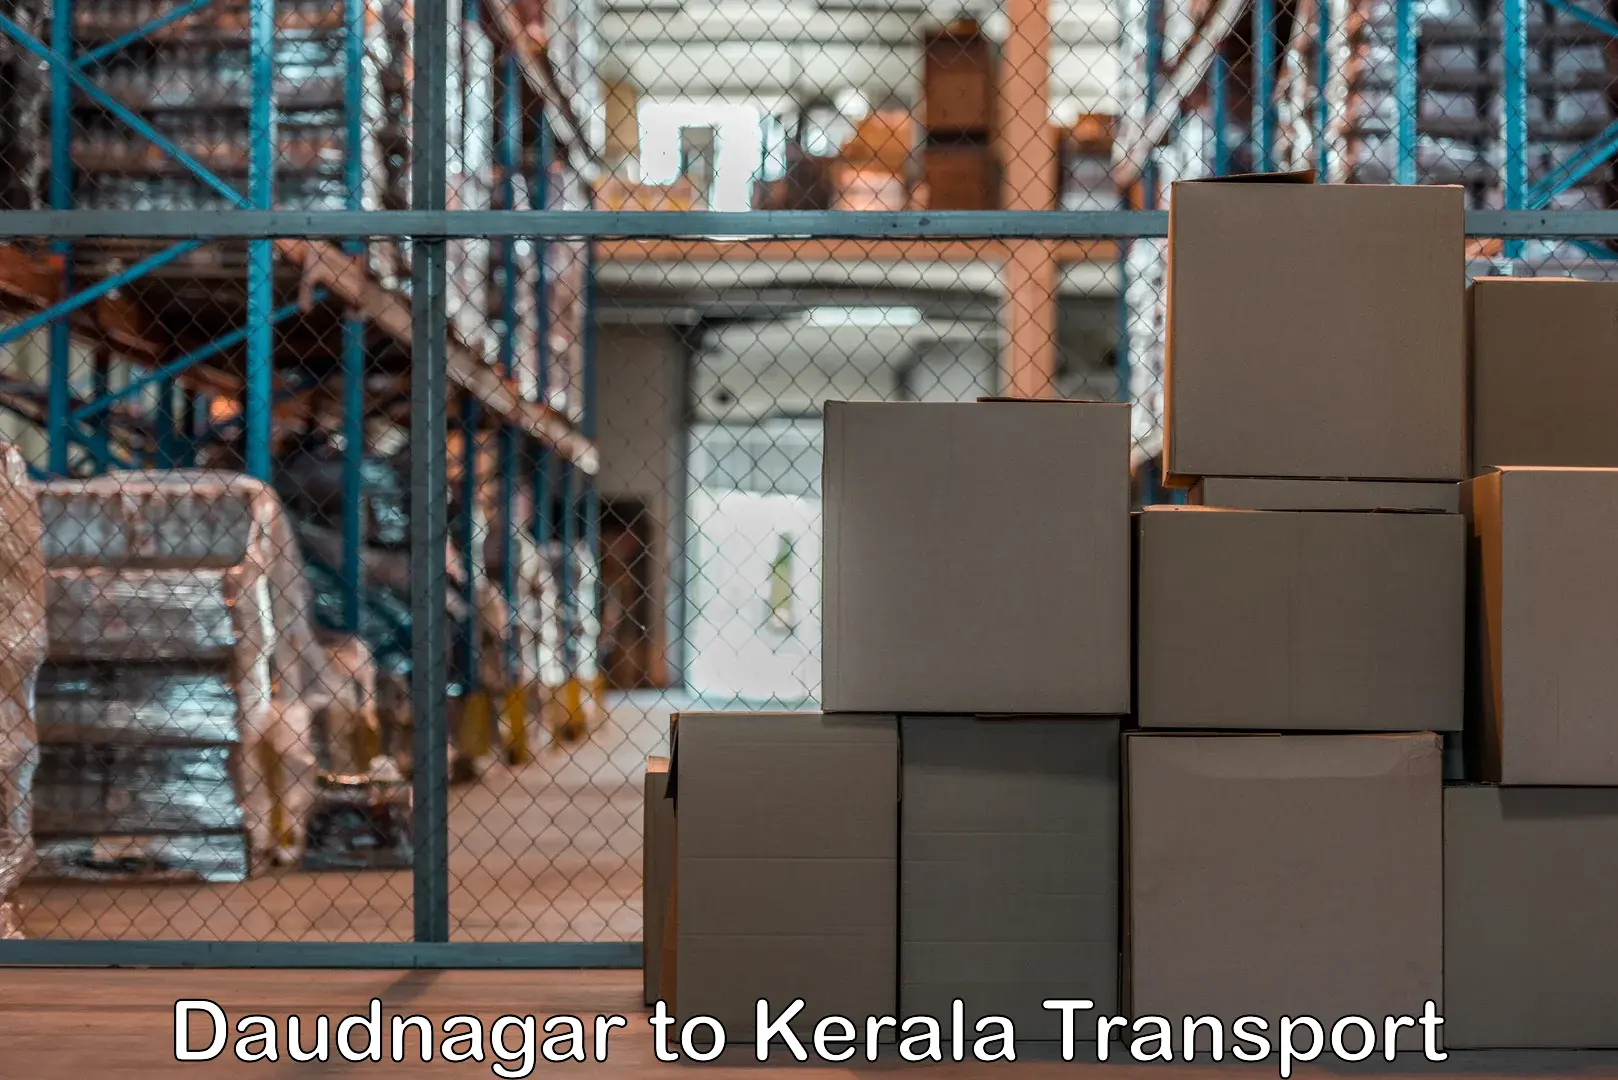 Truck transport companies in India Daudnagar to Kochi